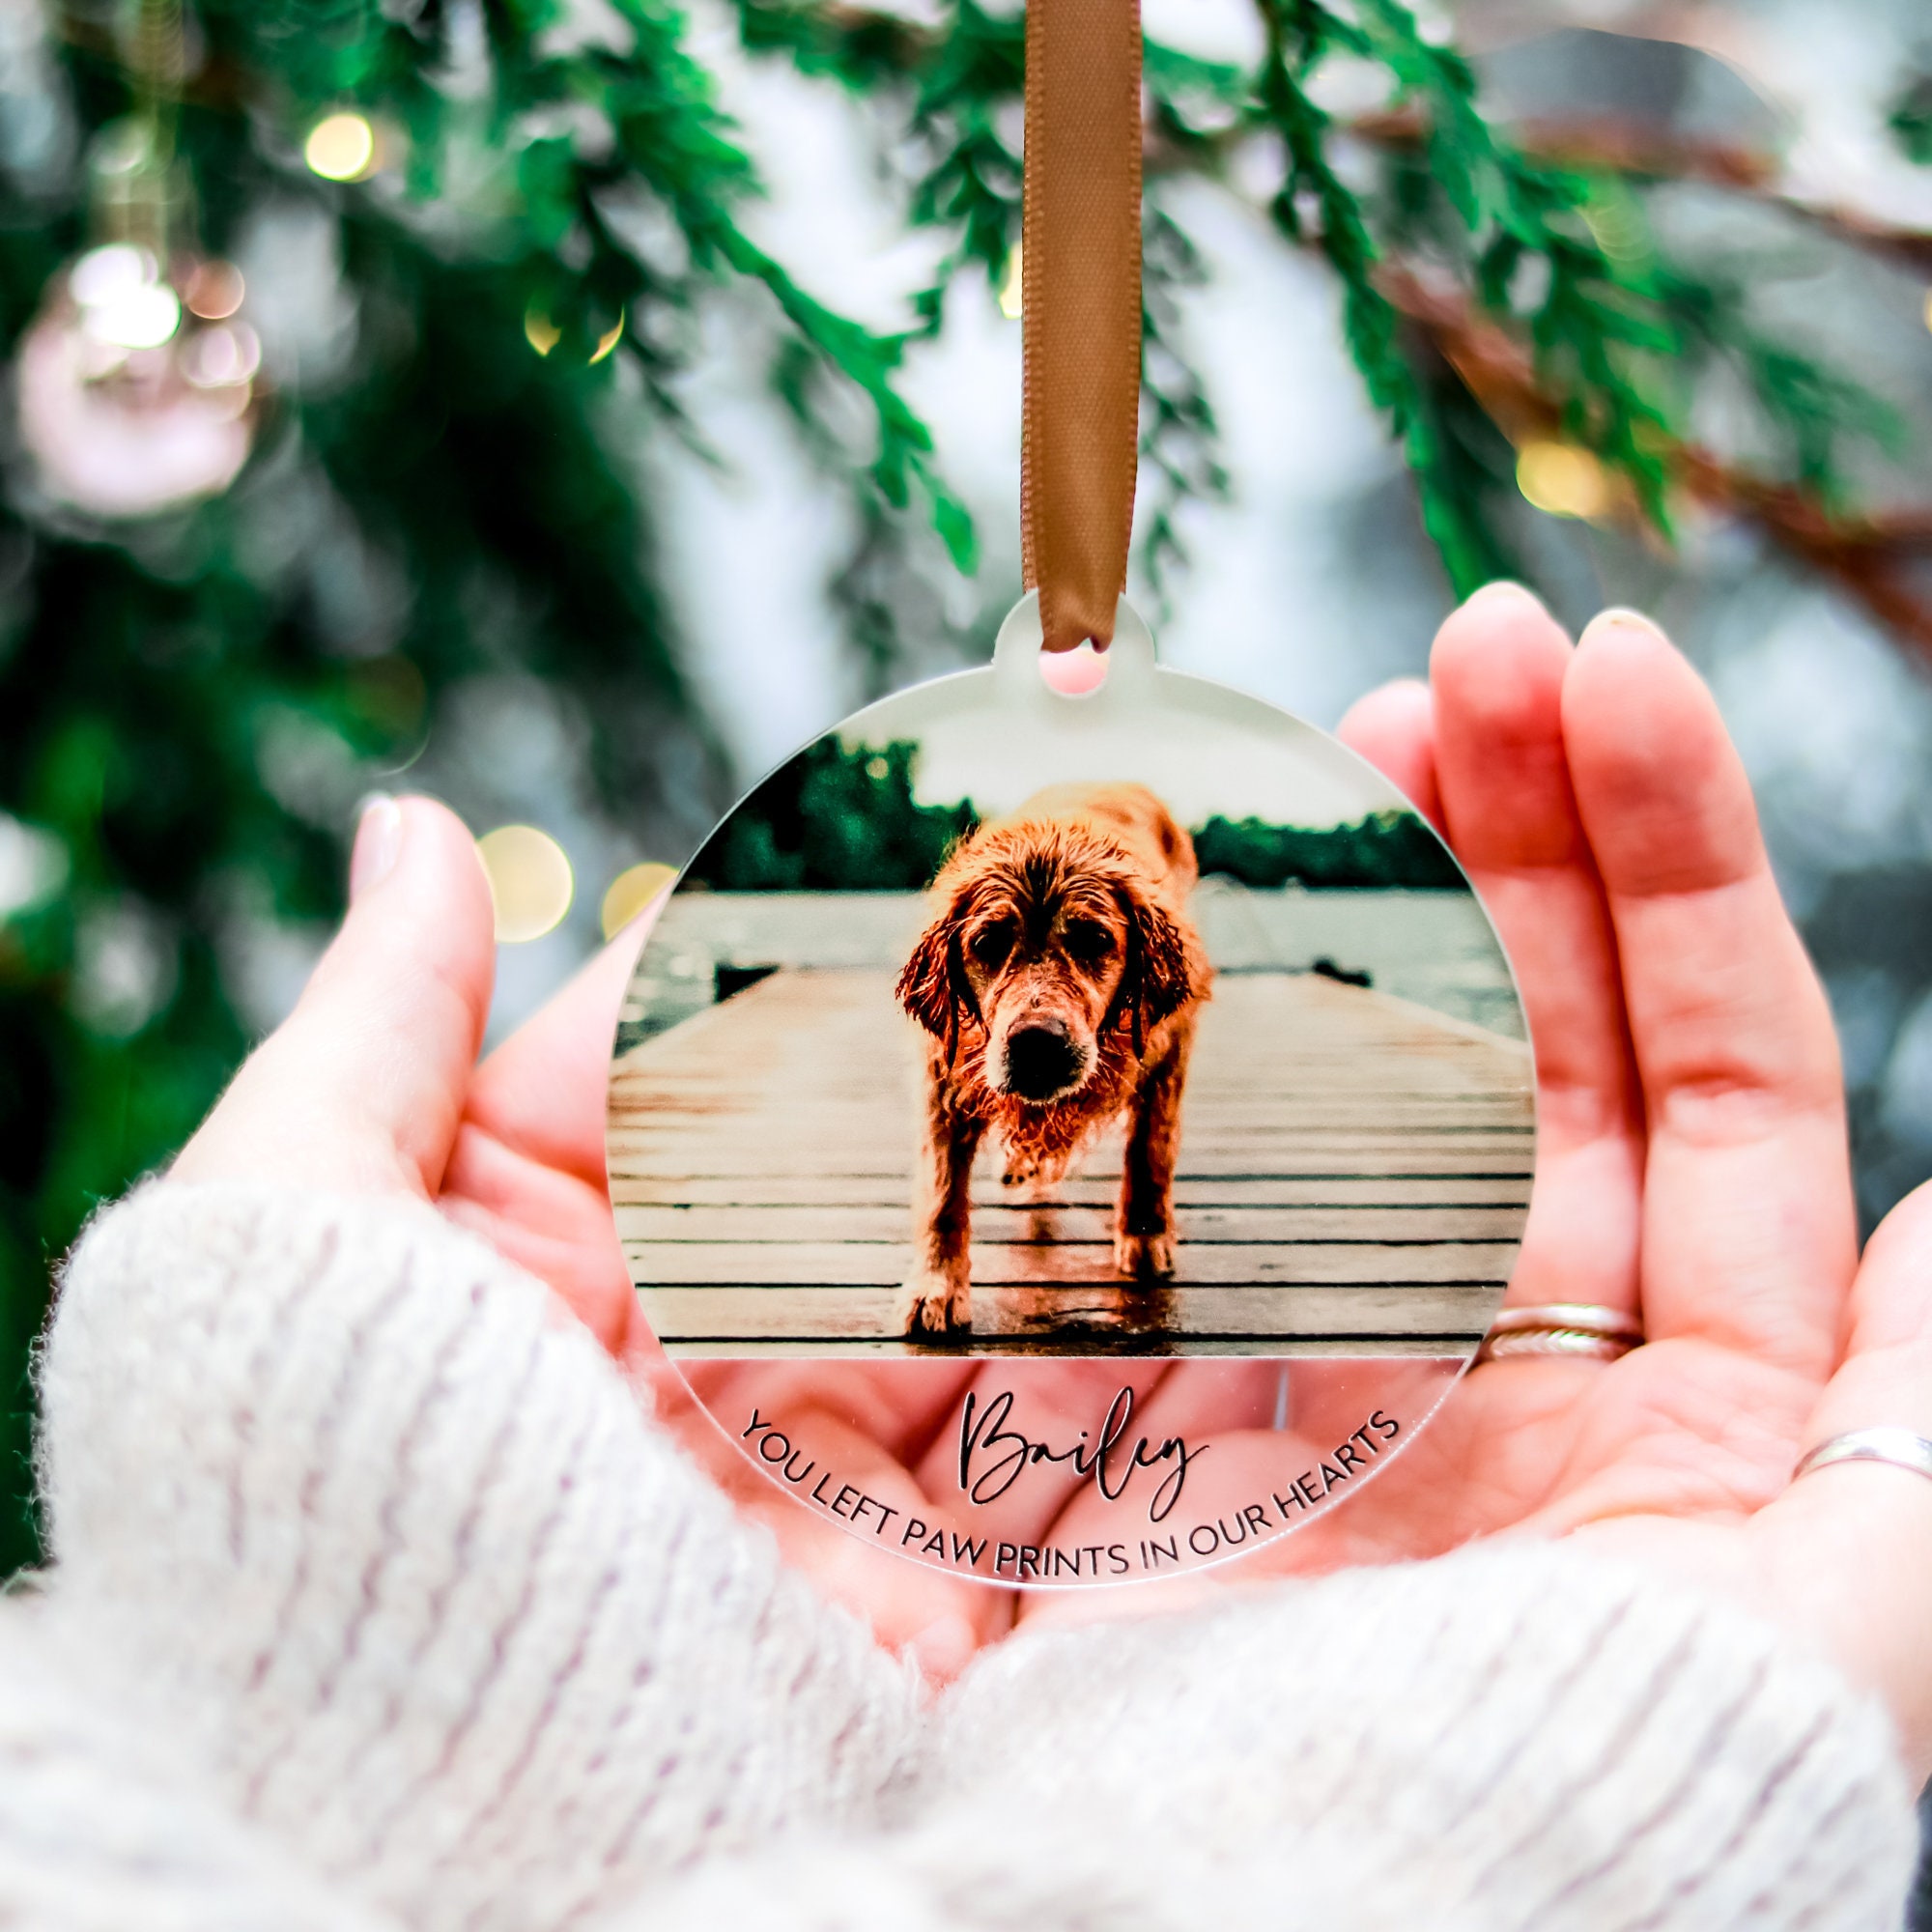 name Xmas gifts gift tag holidays present custom stocking Personalized pet Christmas ornament dog animal name tag